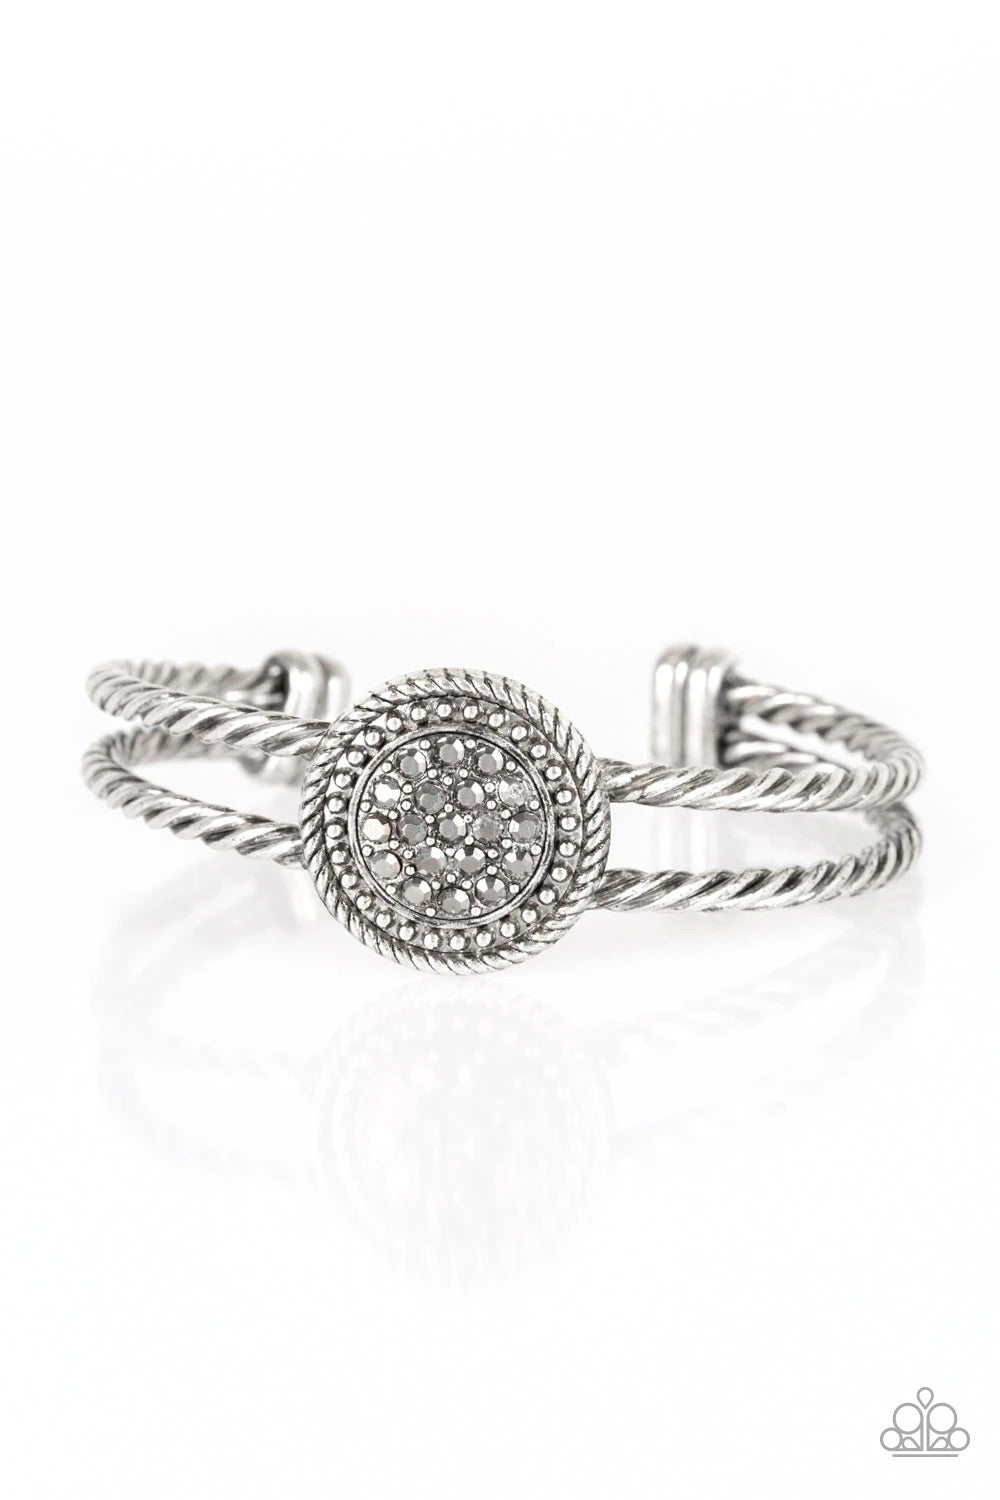 Definitely Dazzling Silver Bracelet freeshipping - JewLz4u Gemstone Gallery